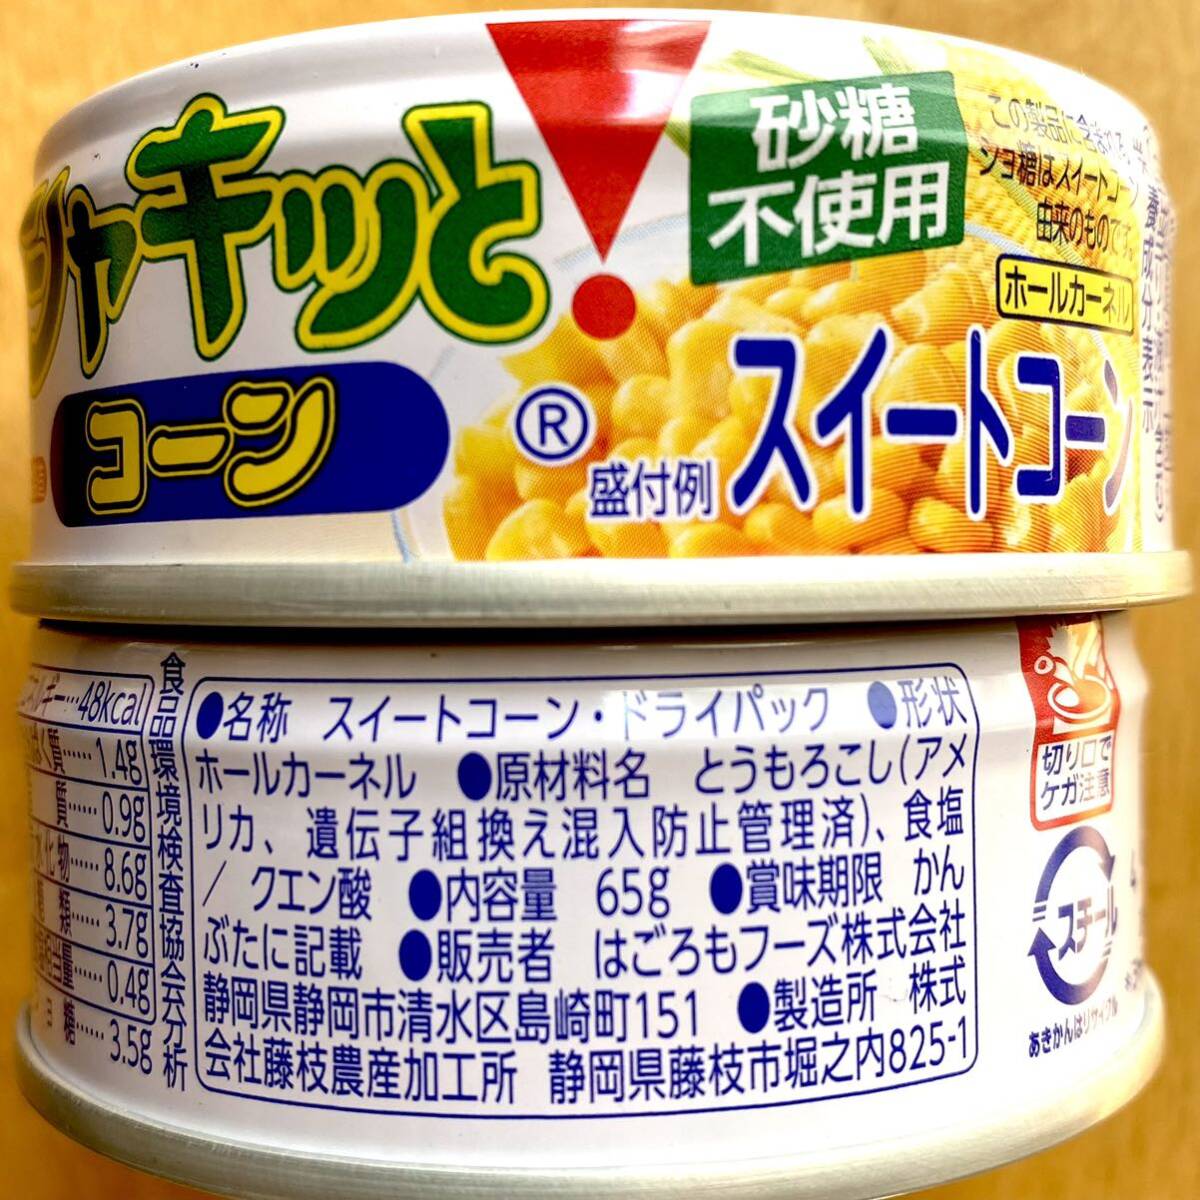 Hagoromo is around .f-z[si-chi gold mild, domestic manufacture goods ][ car ki. corn, sugar un- use ]12 can set tsuna can preserved food coupon use 